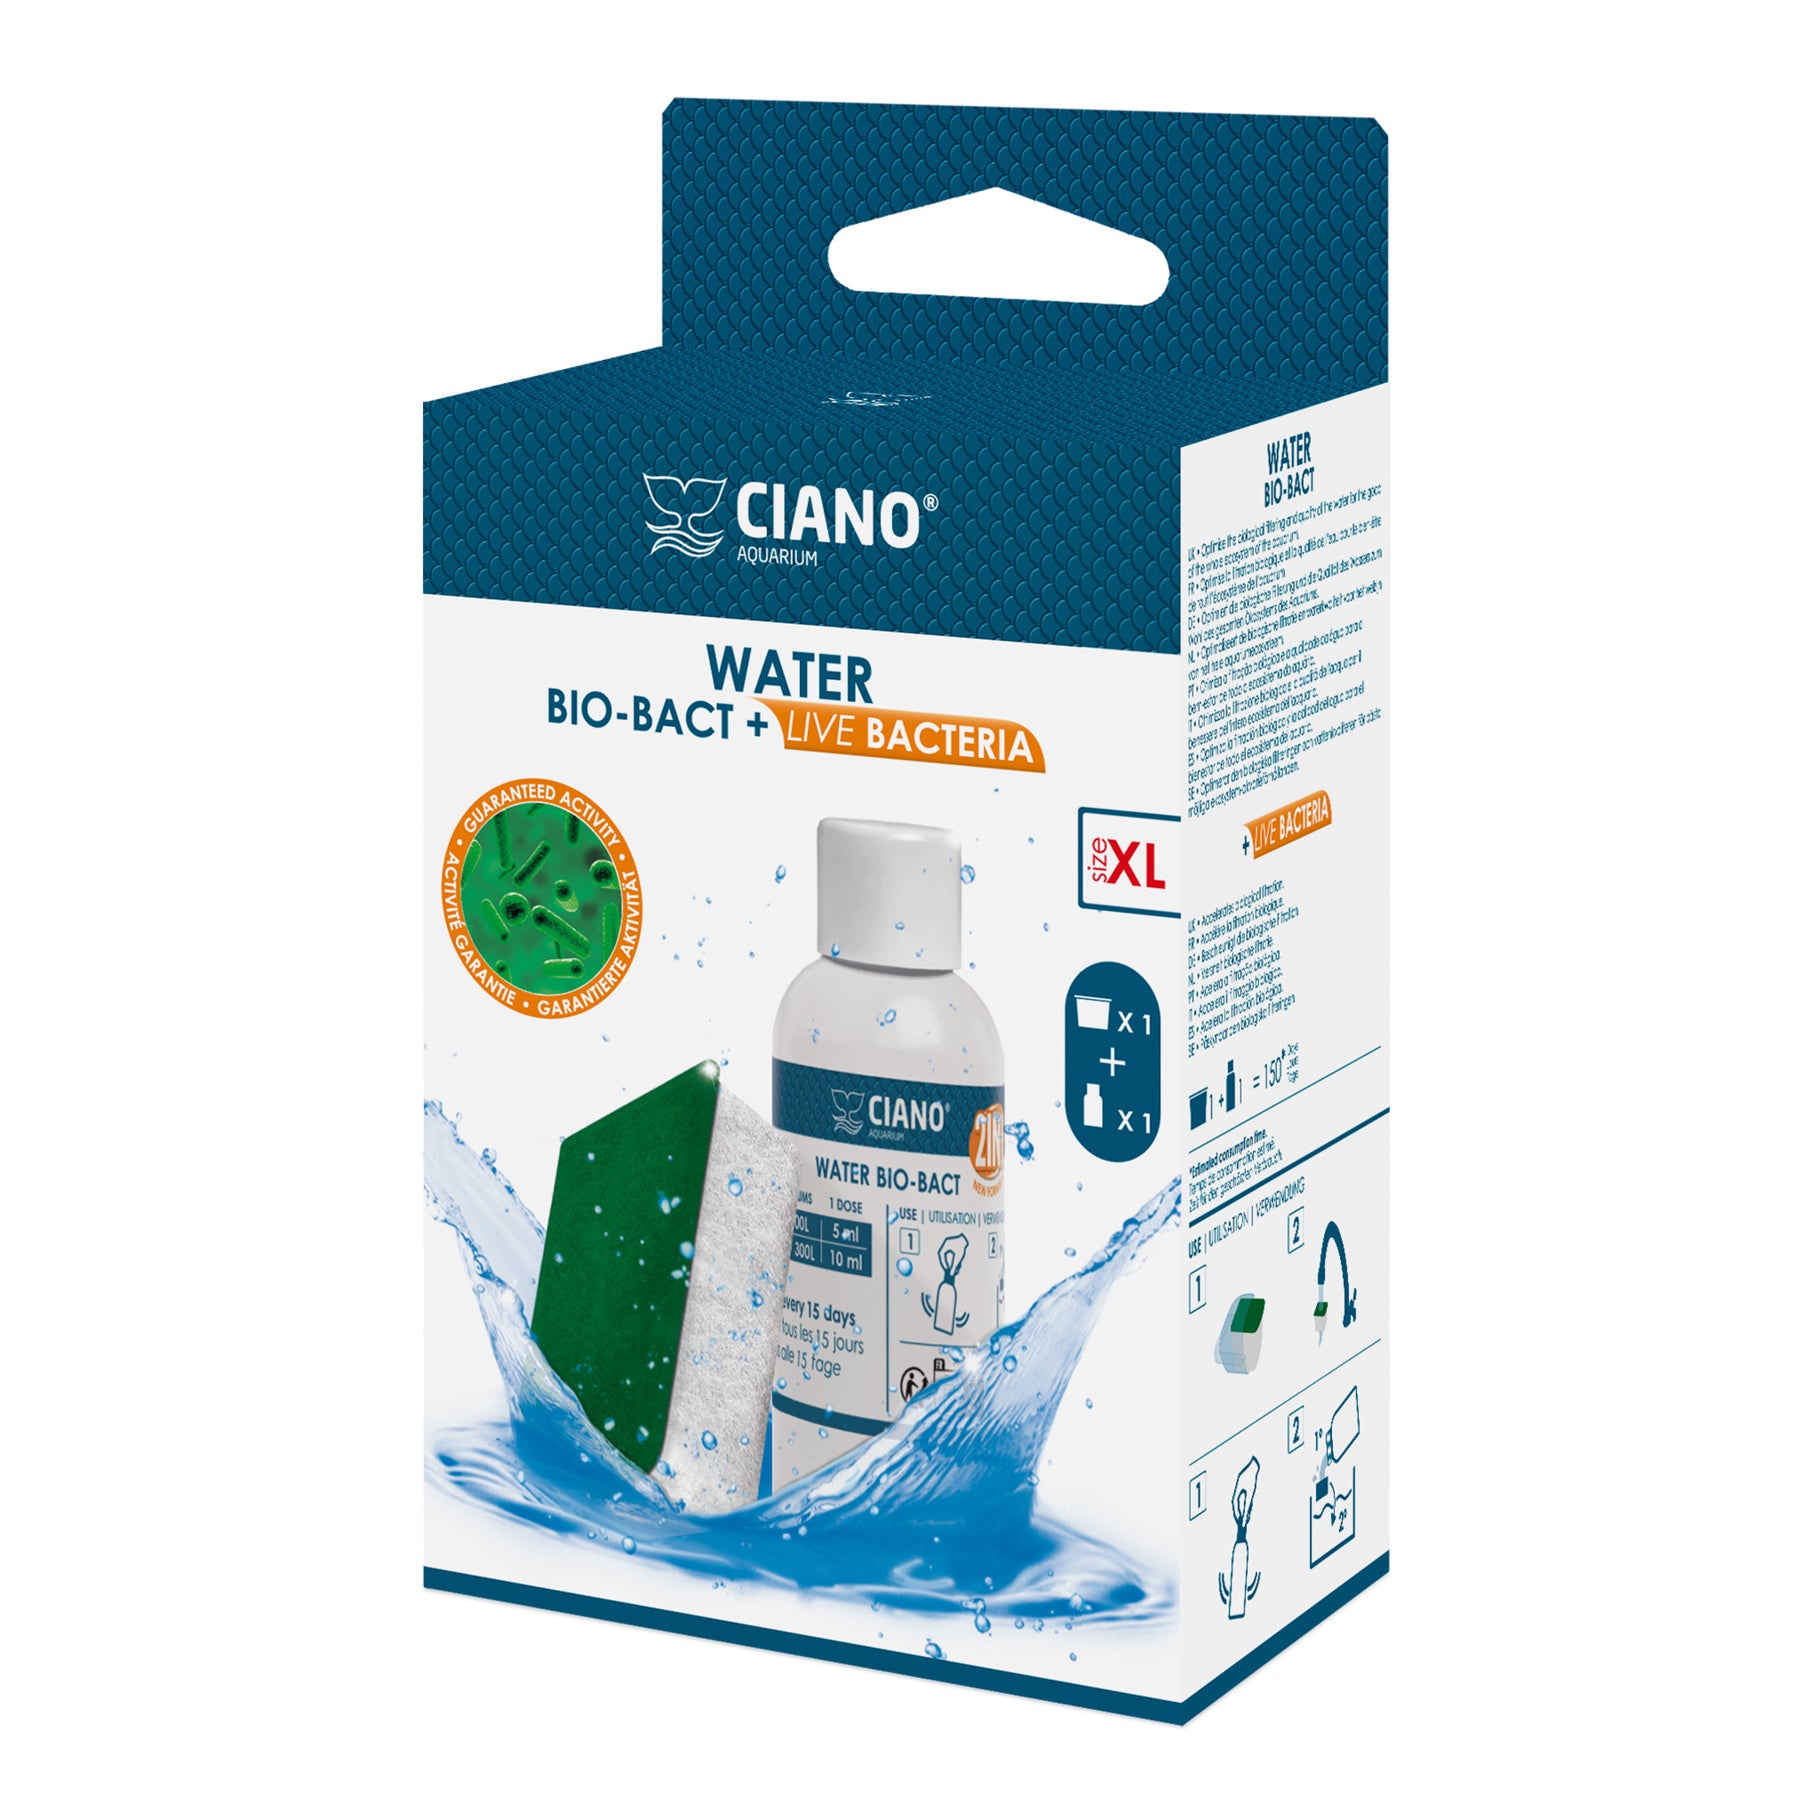 Ciano Water Bio-Bact & Live Bacteria 4 Sizes